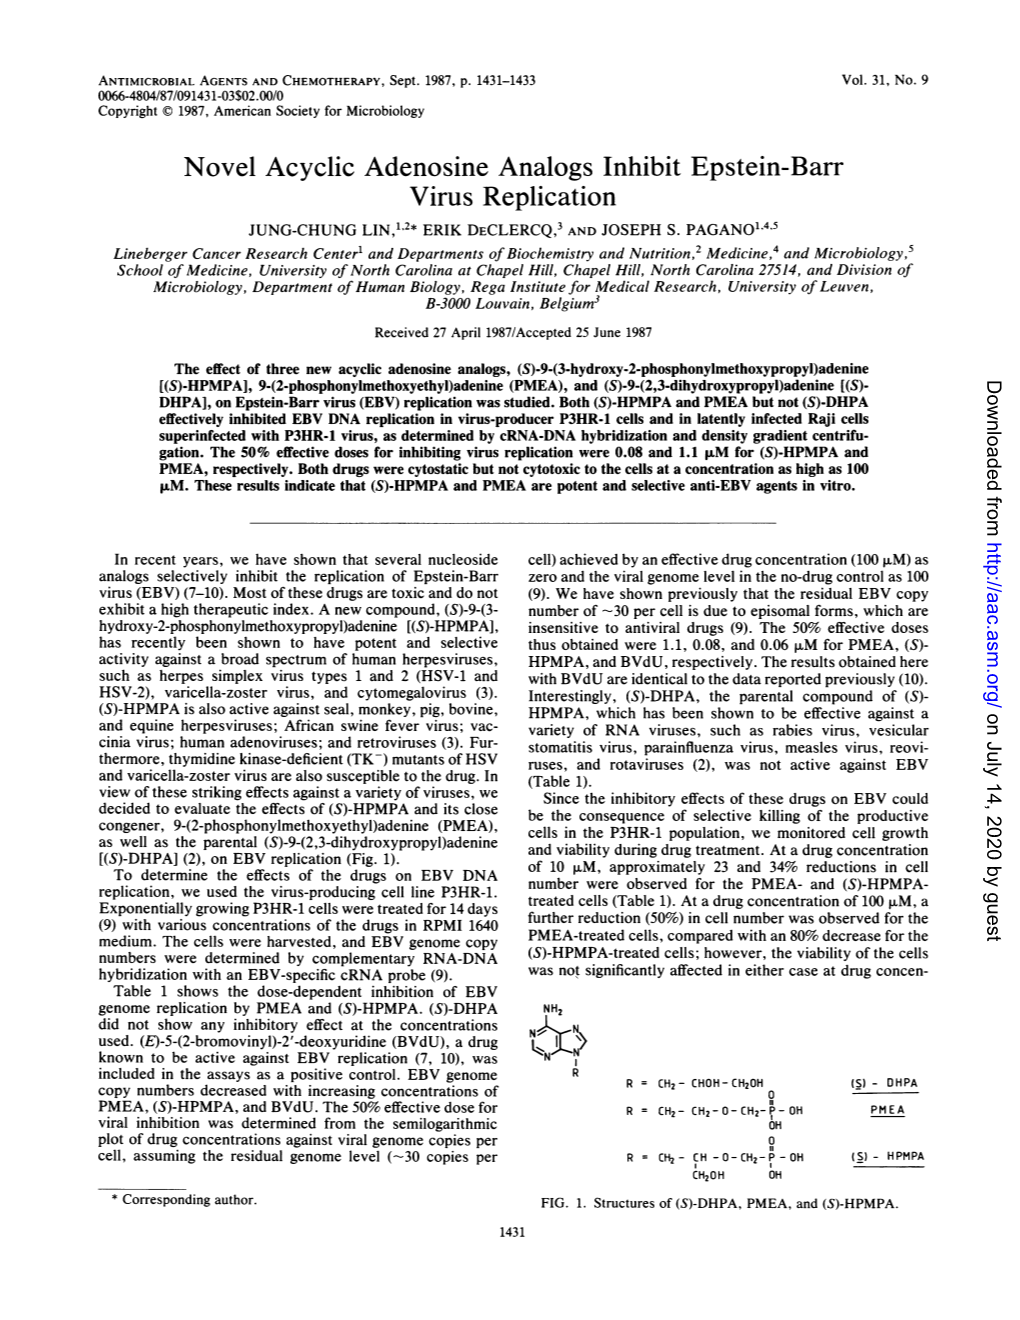 Novel Acyclic Adenosine Analogs Inhibit Epstein-Barr Virus Replication JUNG-CHUNG LIN,',2* ERIK DECLERCQ,3 and JOSEPH S